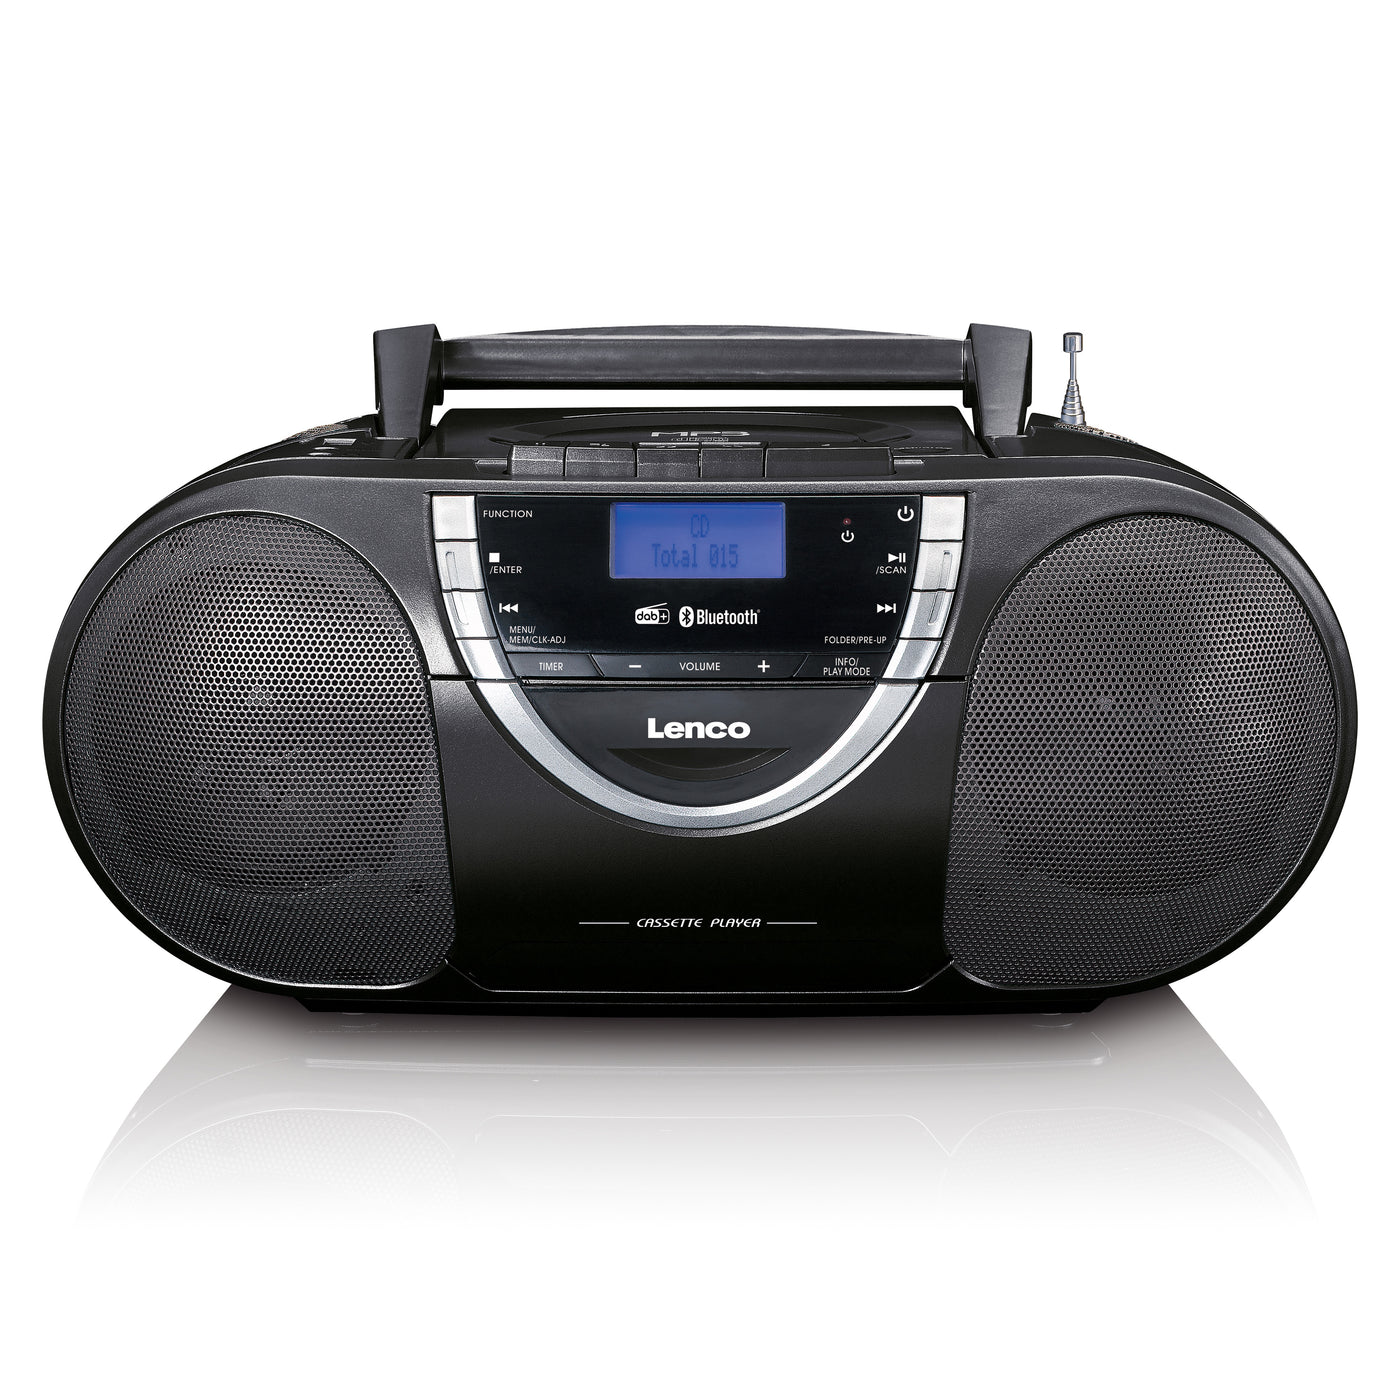 Lenco SCD-6900BK - Tragbarer Radio-CD-Player mit DAB+ und Kassette - Grau